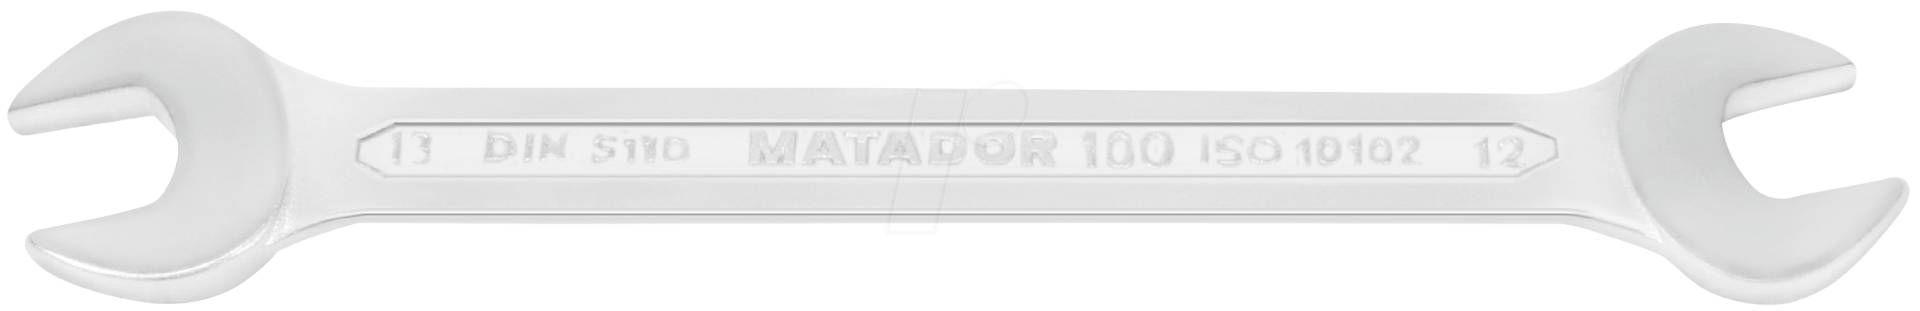 MAT 0100 9120 - Maulschlüsselsatz, SW 6-32, 12-teilig, DIN 3110 von Matador